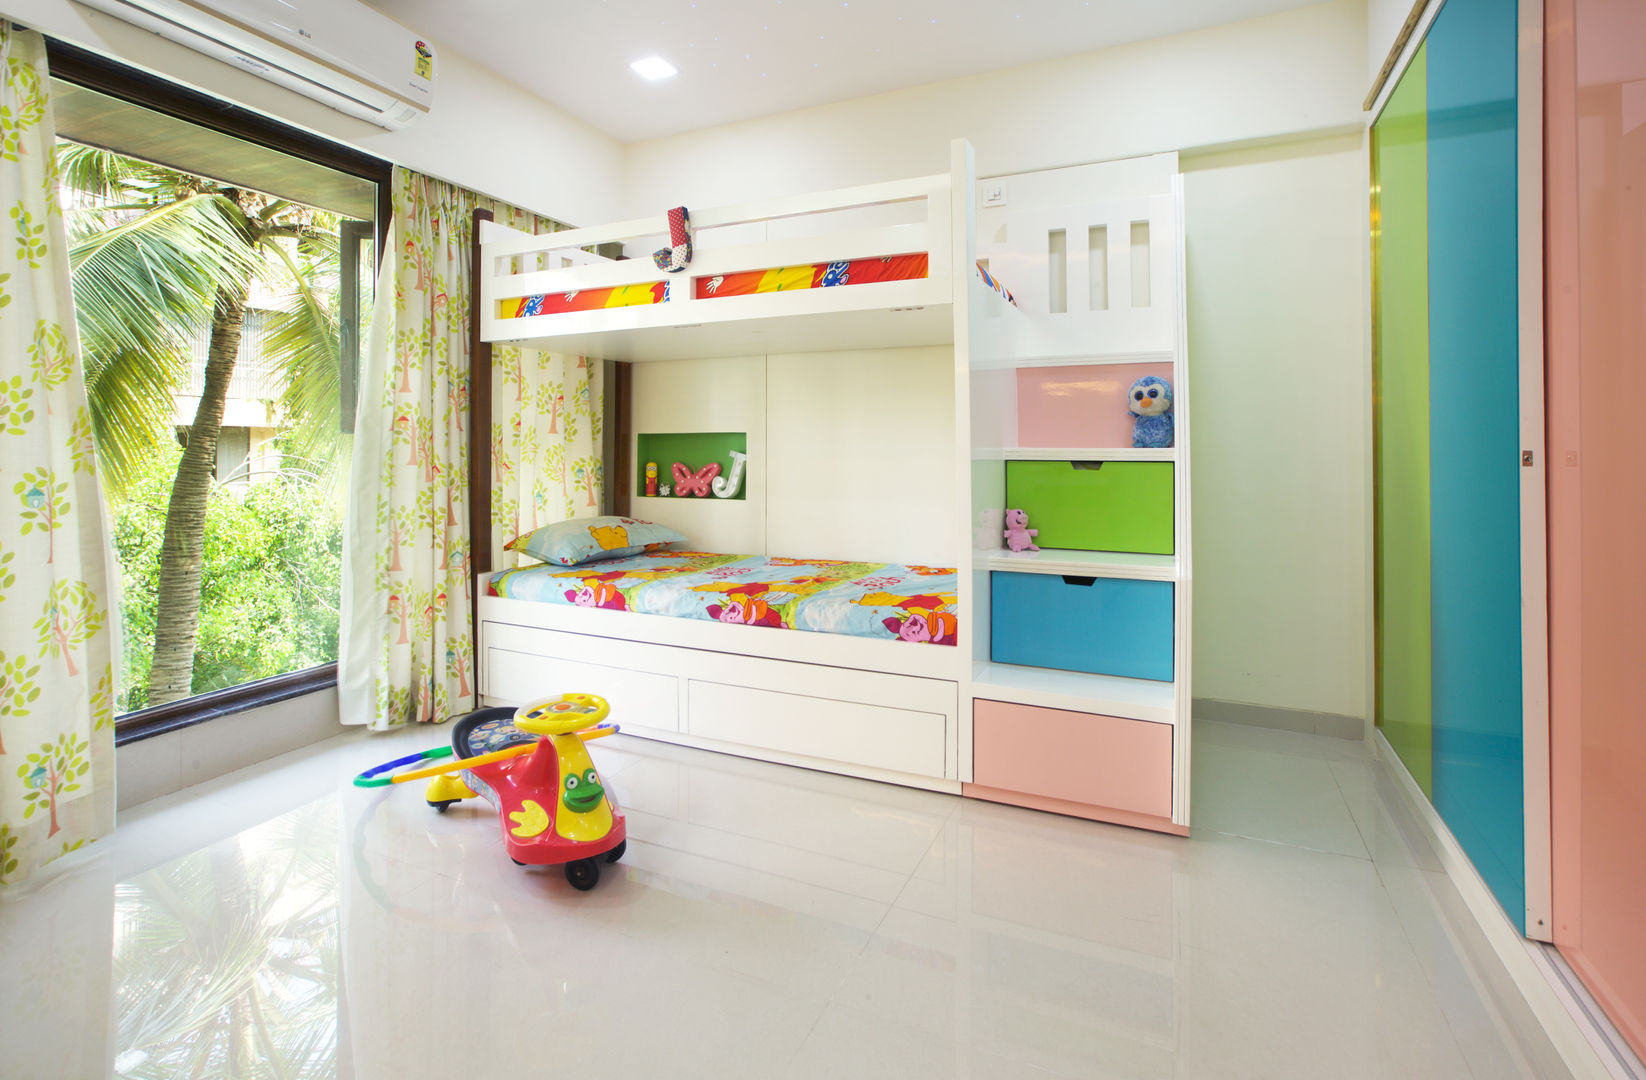 Lakhanis, Mumbai, Urbane Storey Urbane Storey Modern Kid's Room